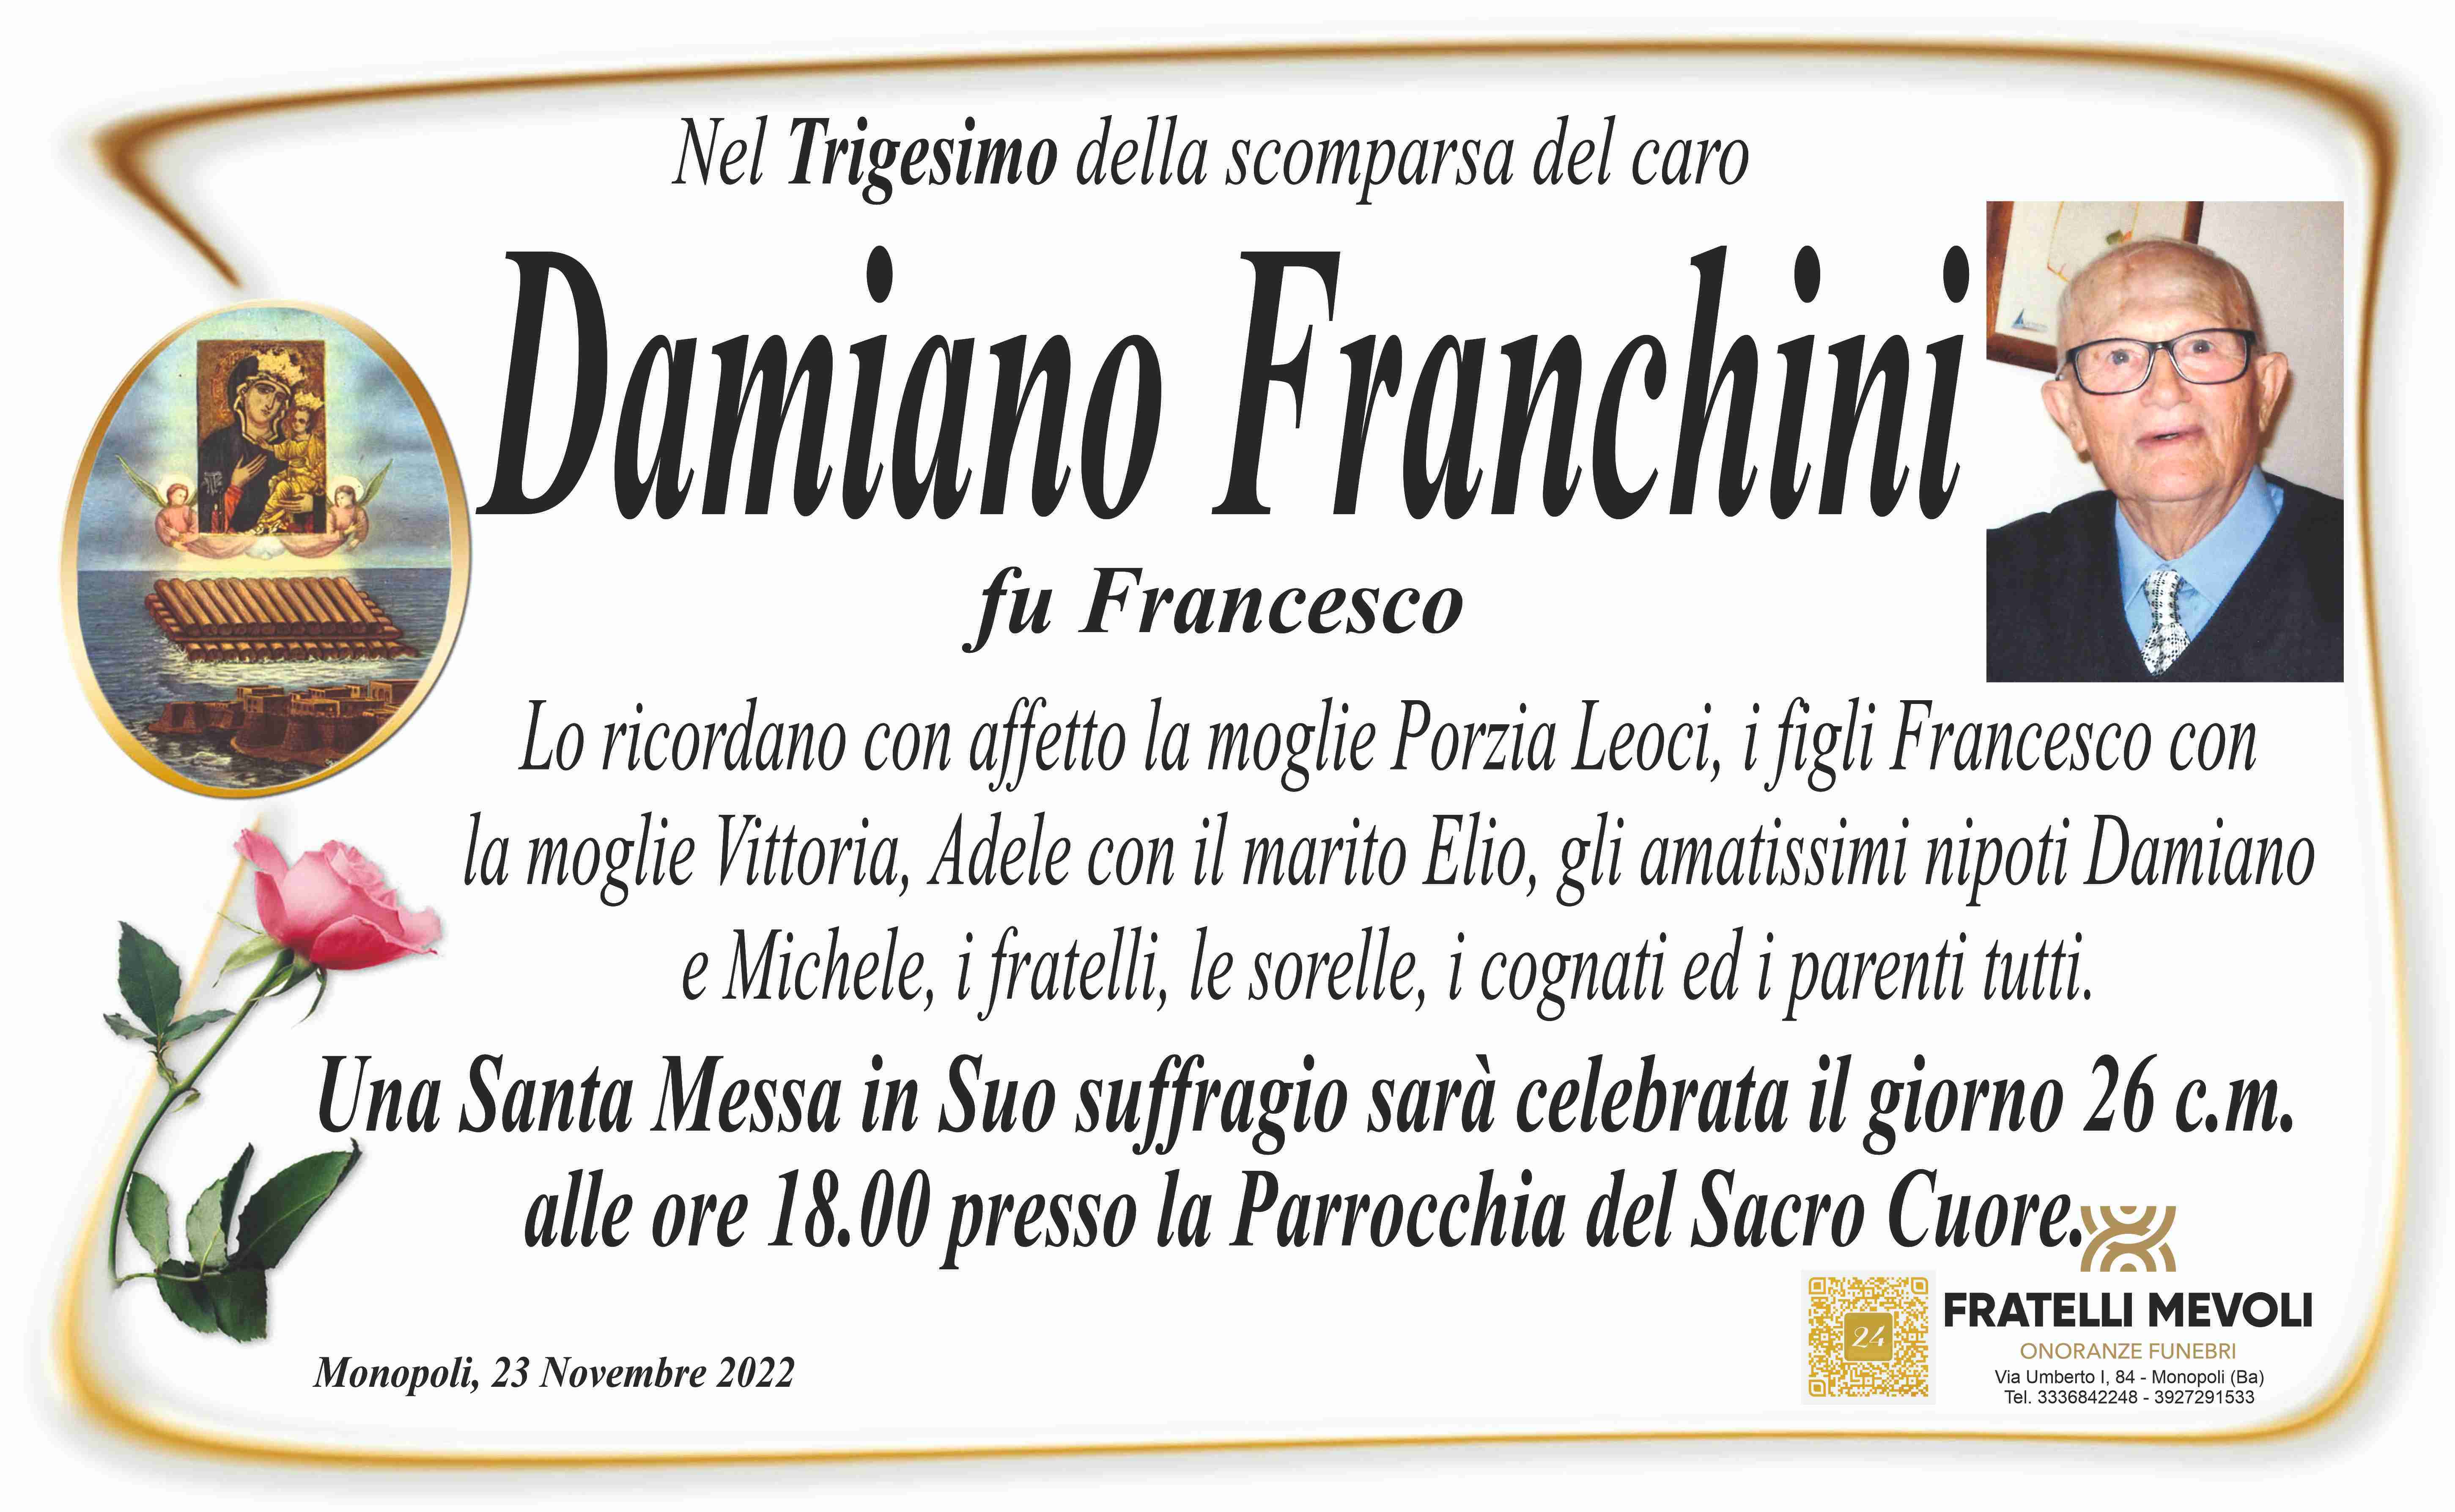 Damiano Franchini